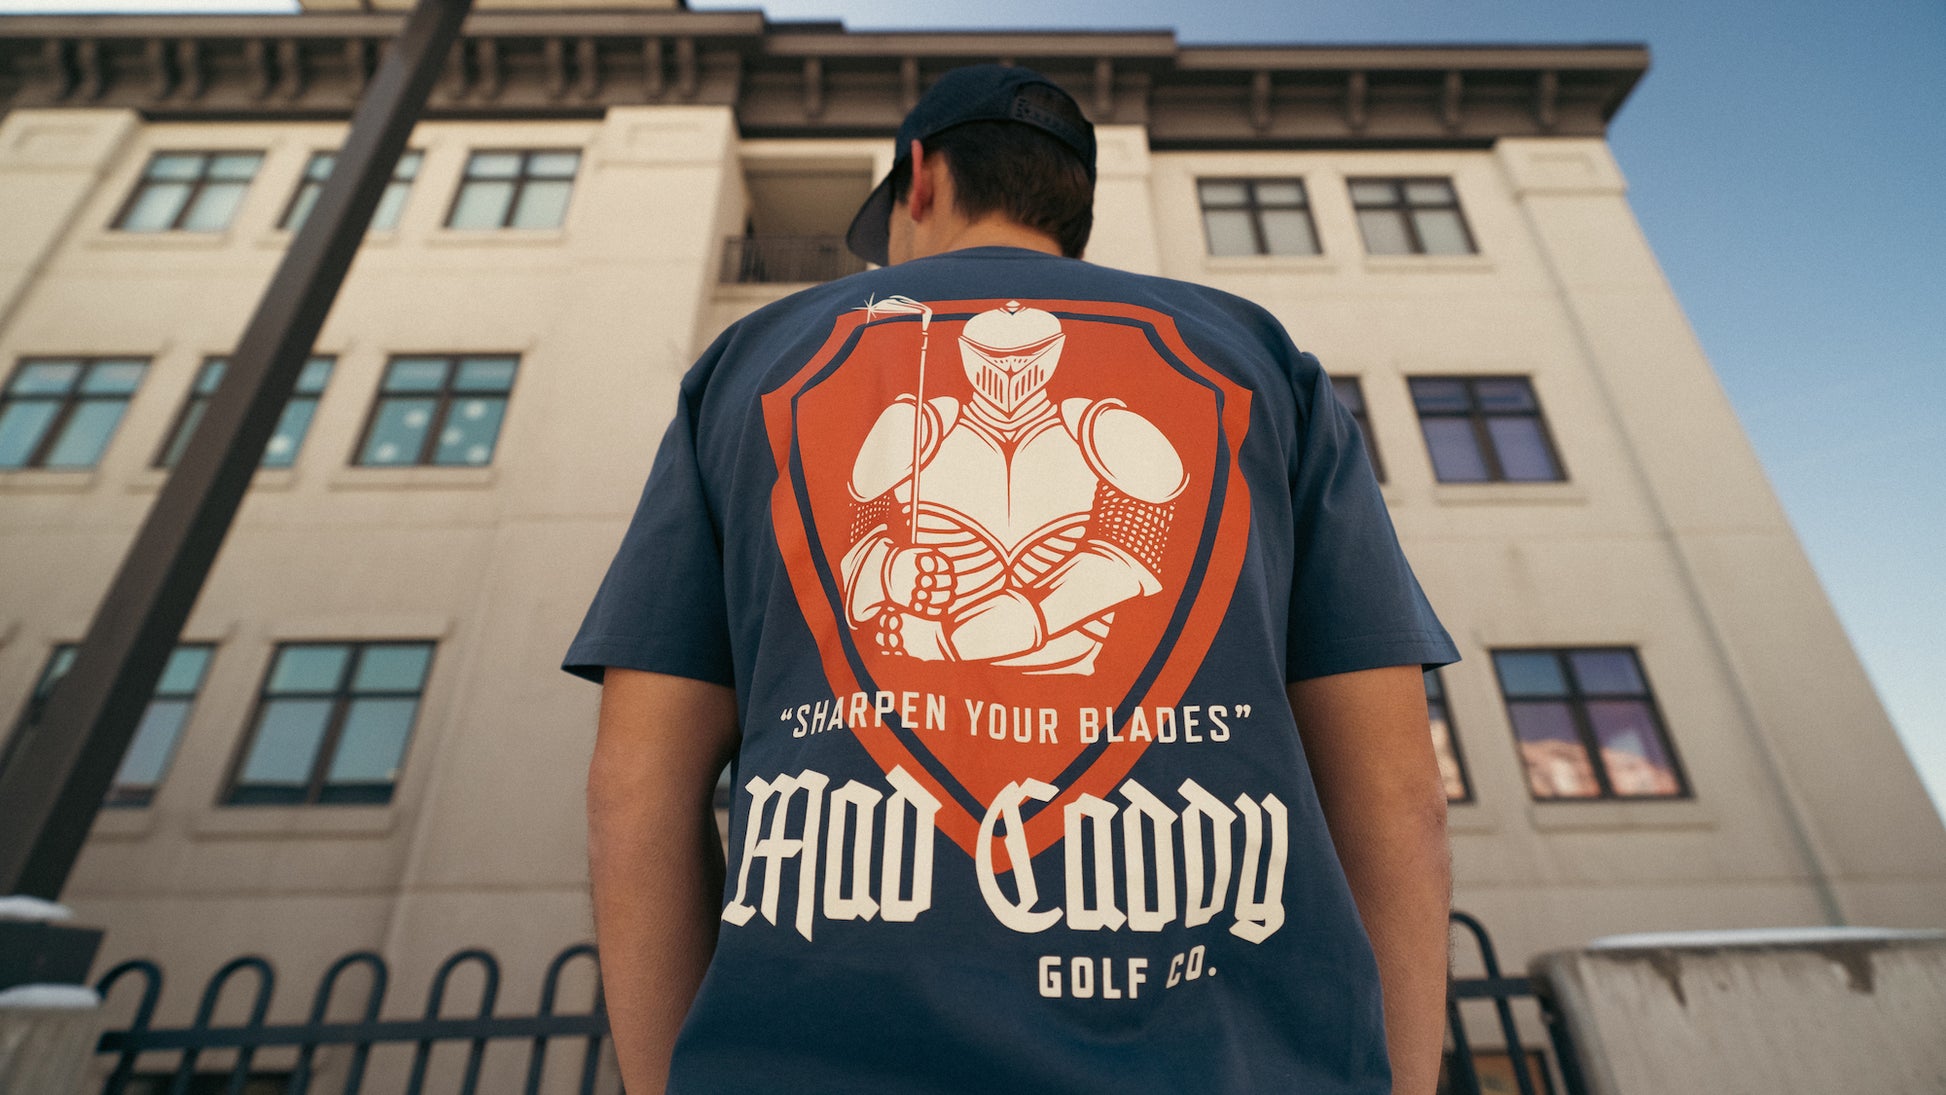 Sharpen Your Blades - Tee - Ocean Blue - Mad Caddy Golf Co.